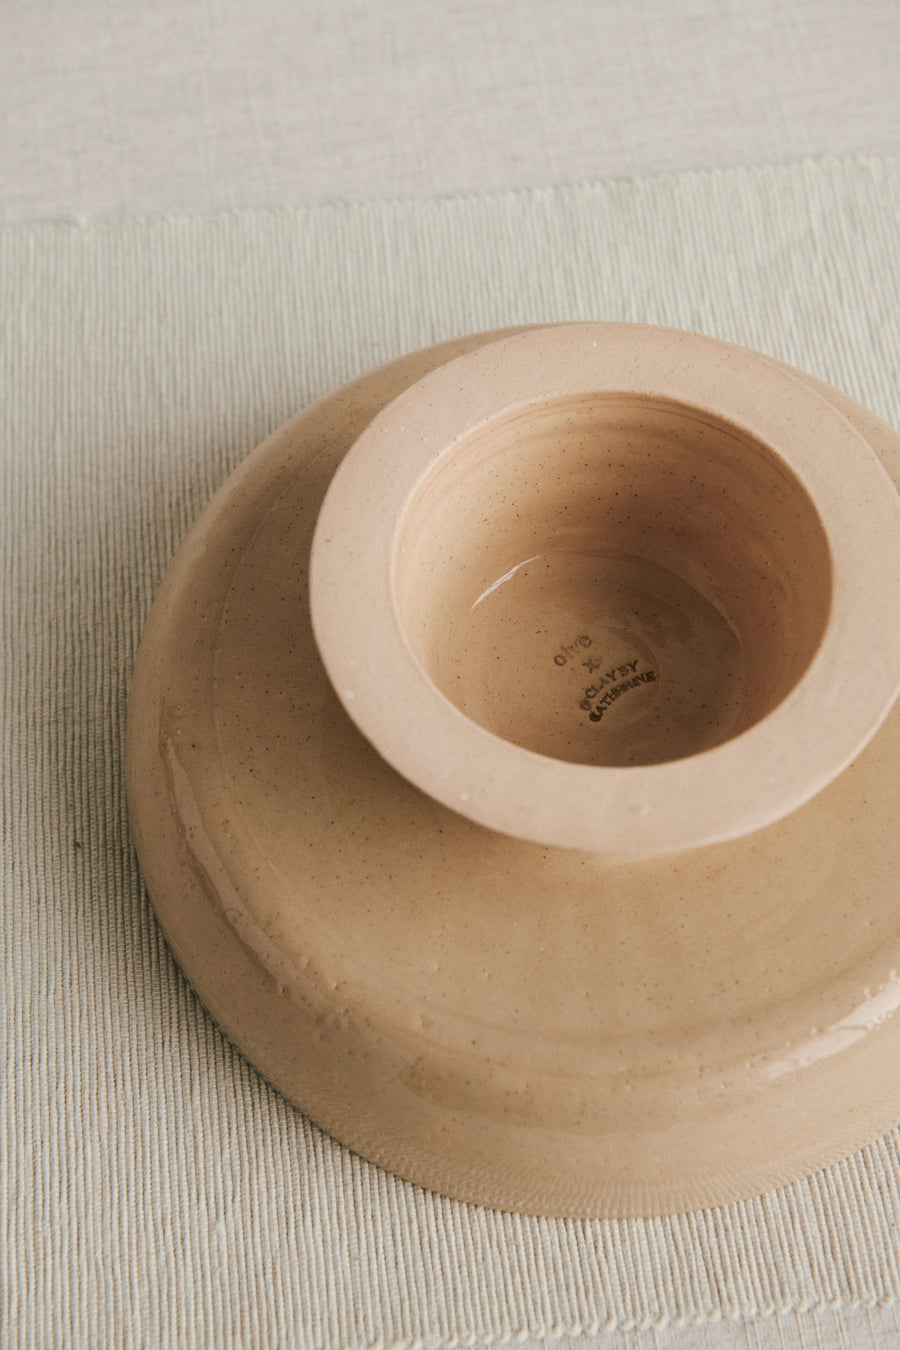 Pedestal Bowl in Clay